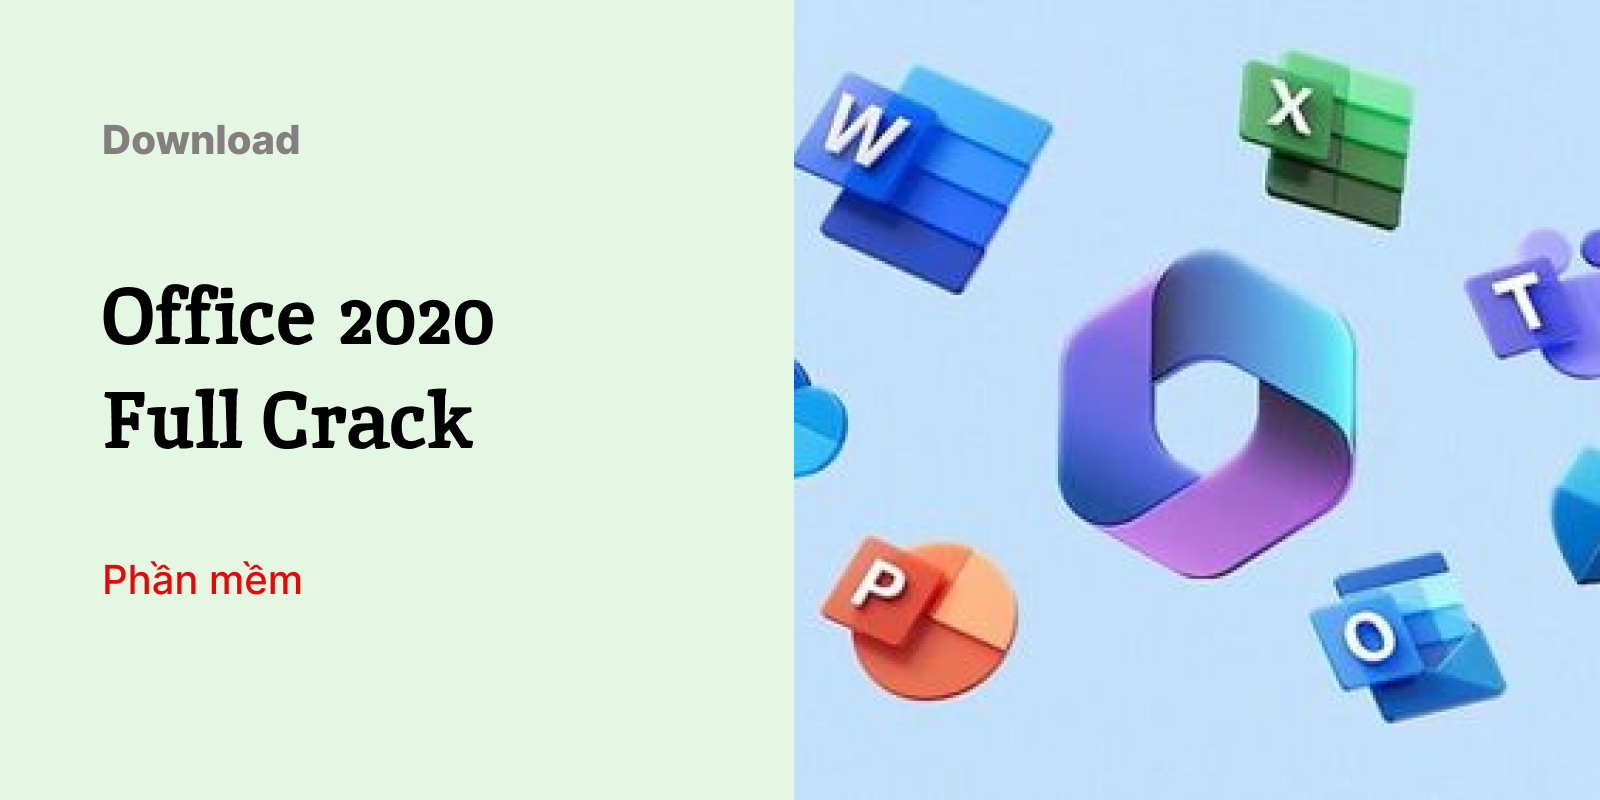 Cách Tải Microsoft Office 2020 Full Crack, Link Google Drive